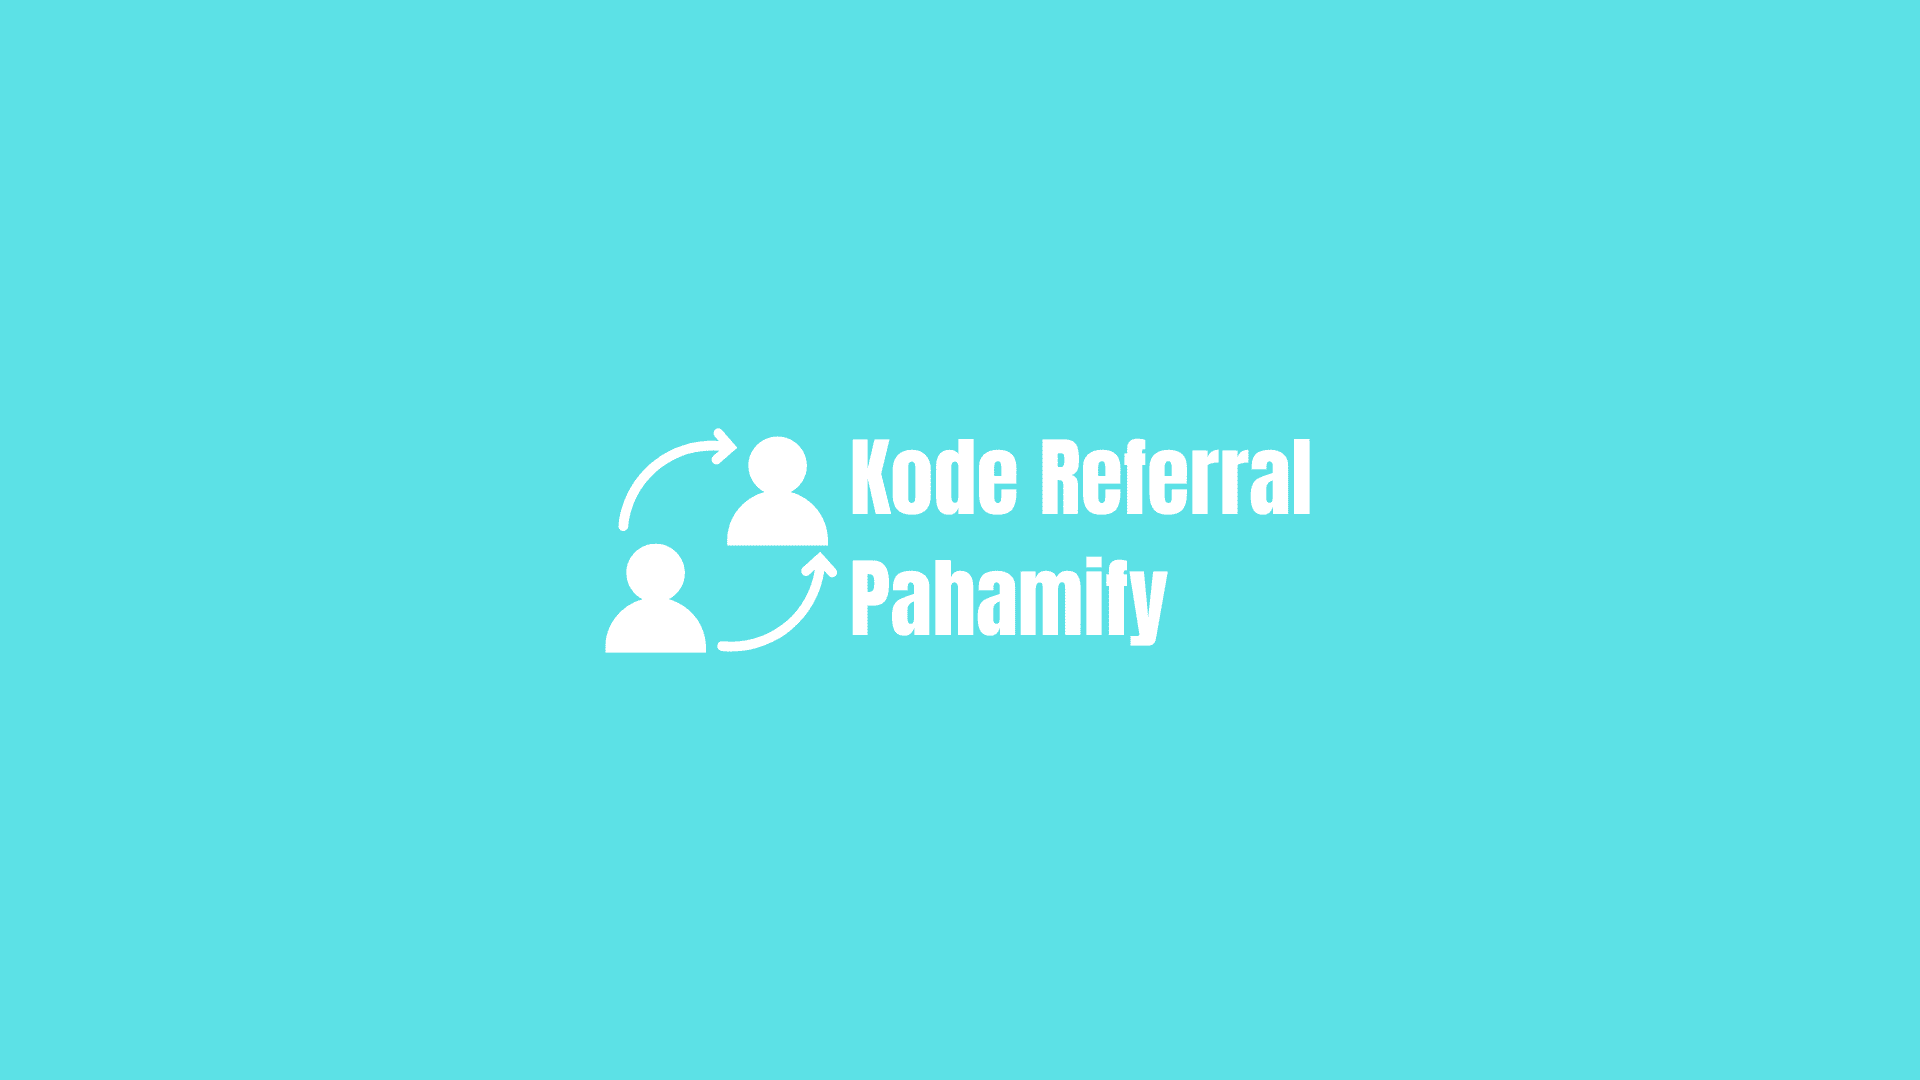 kode referral pahamify